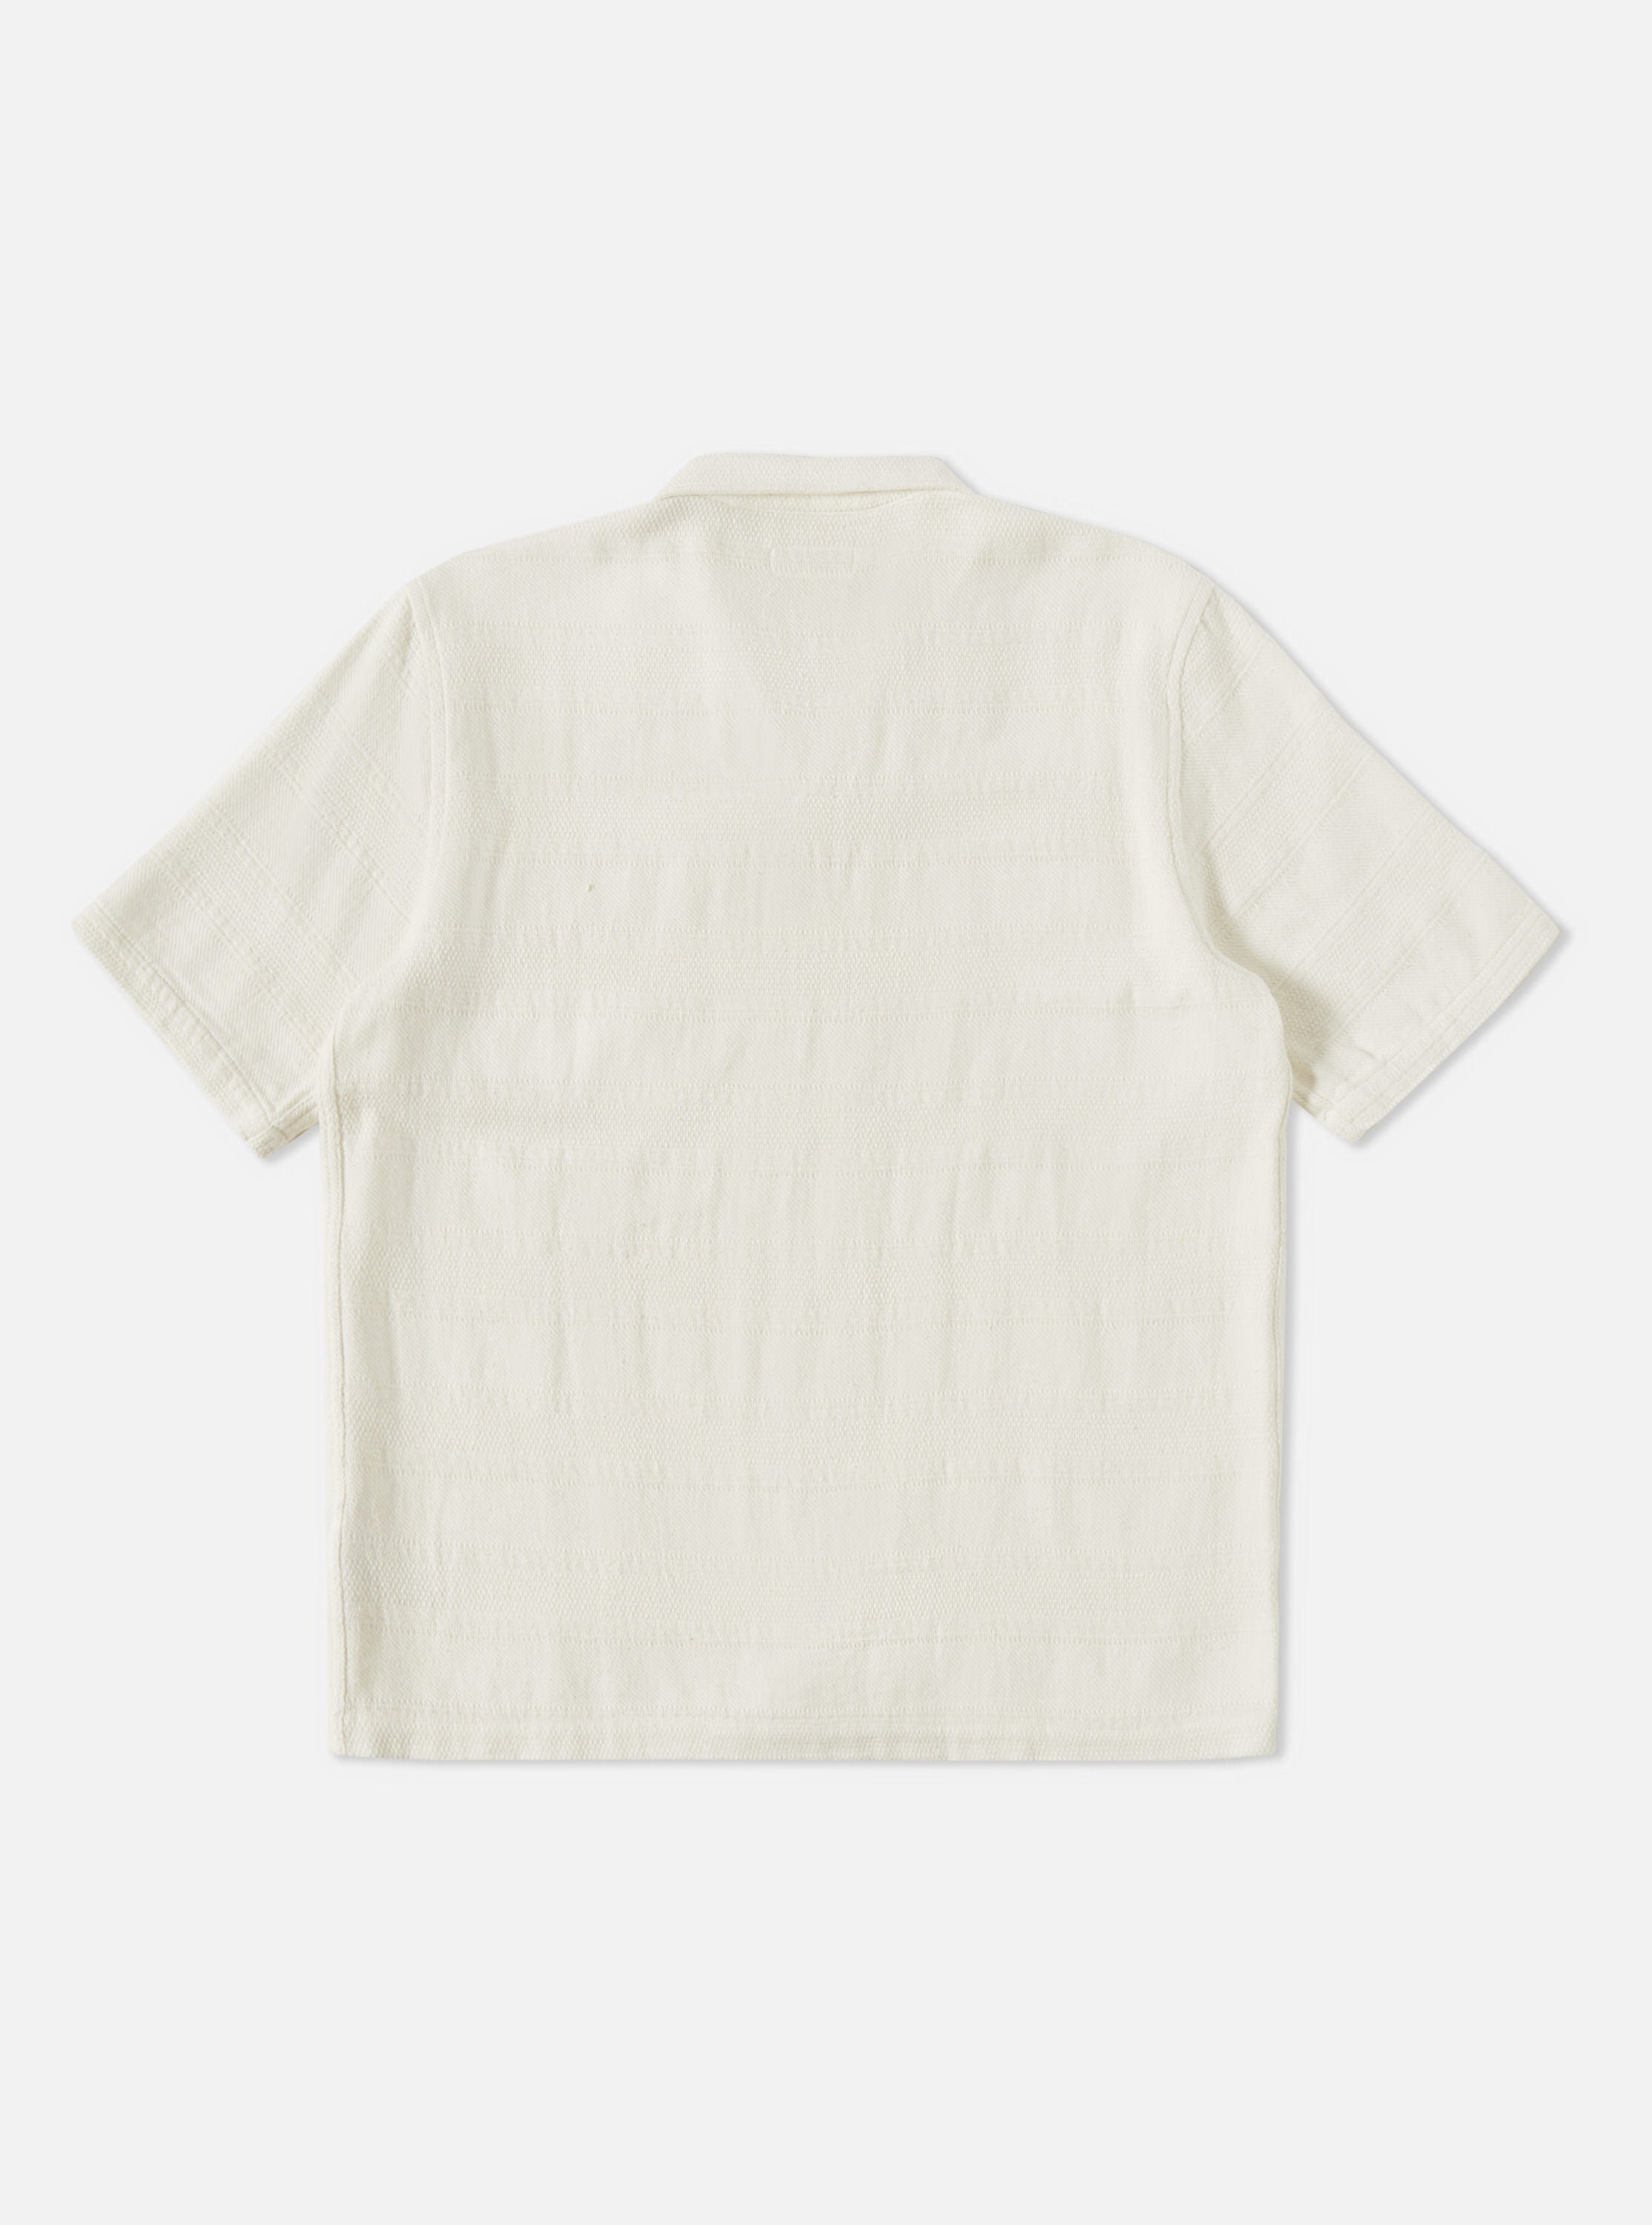 Universal Works Road Shirt in White Tipzzi Stripe